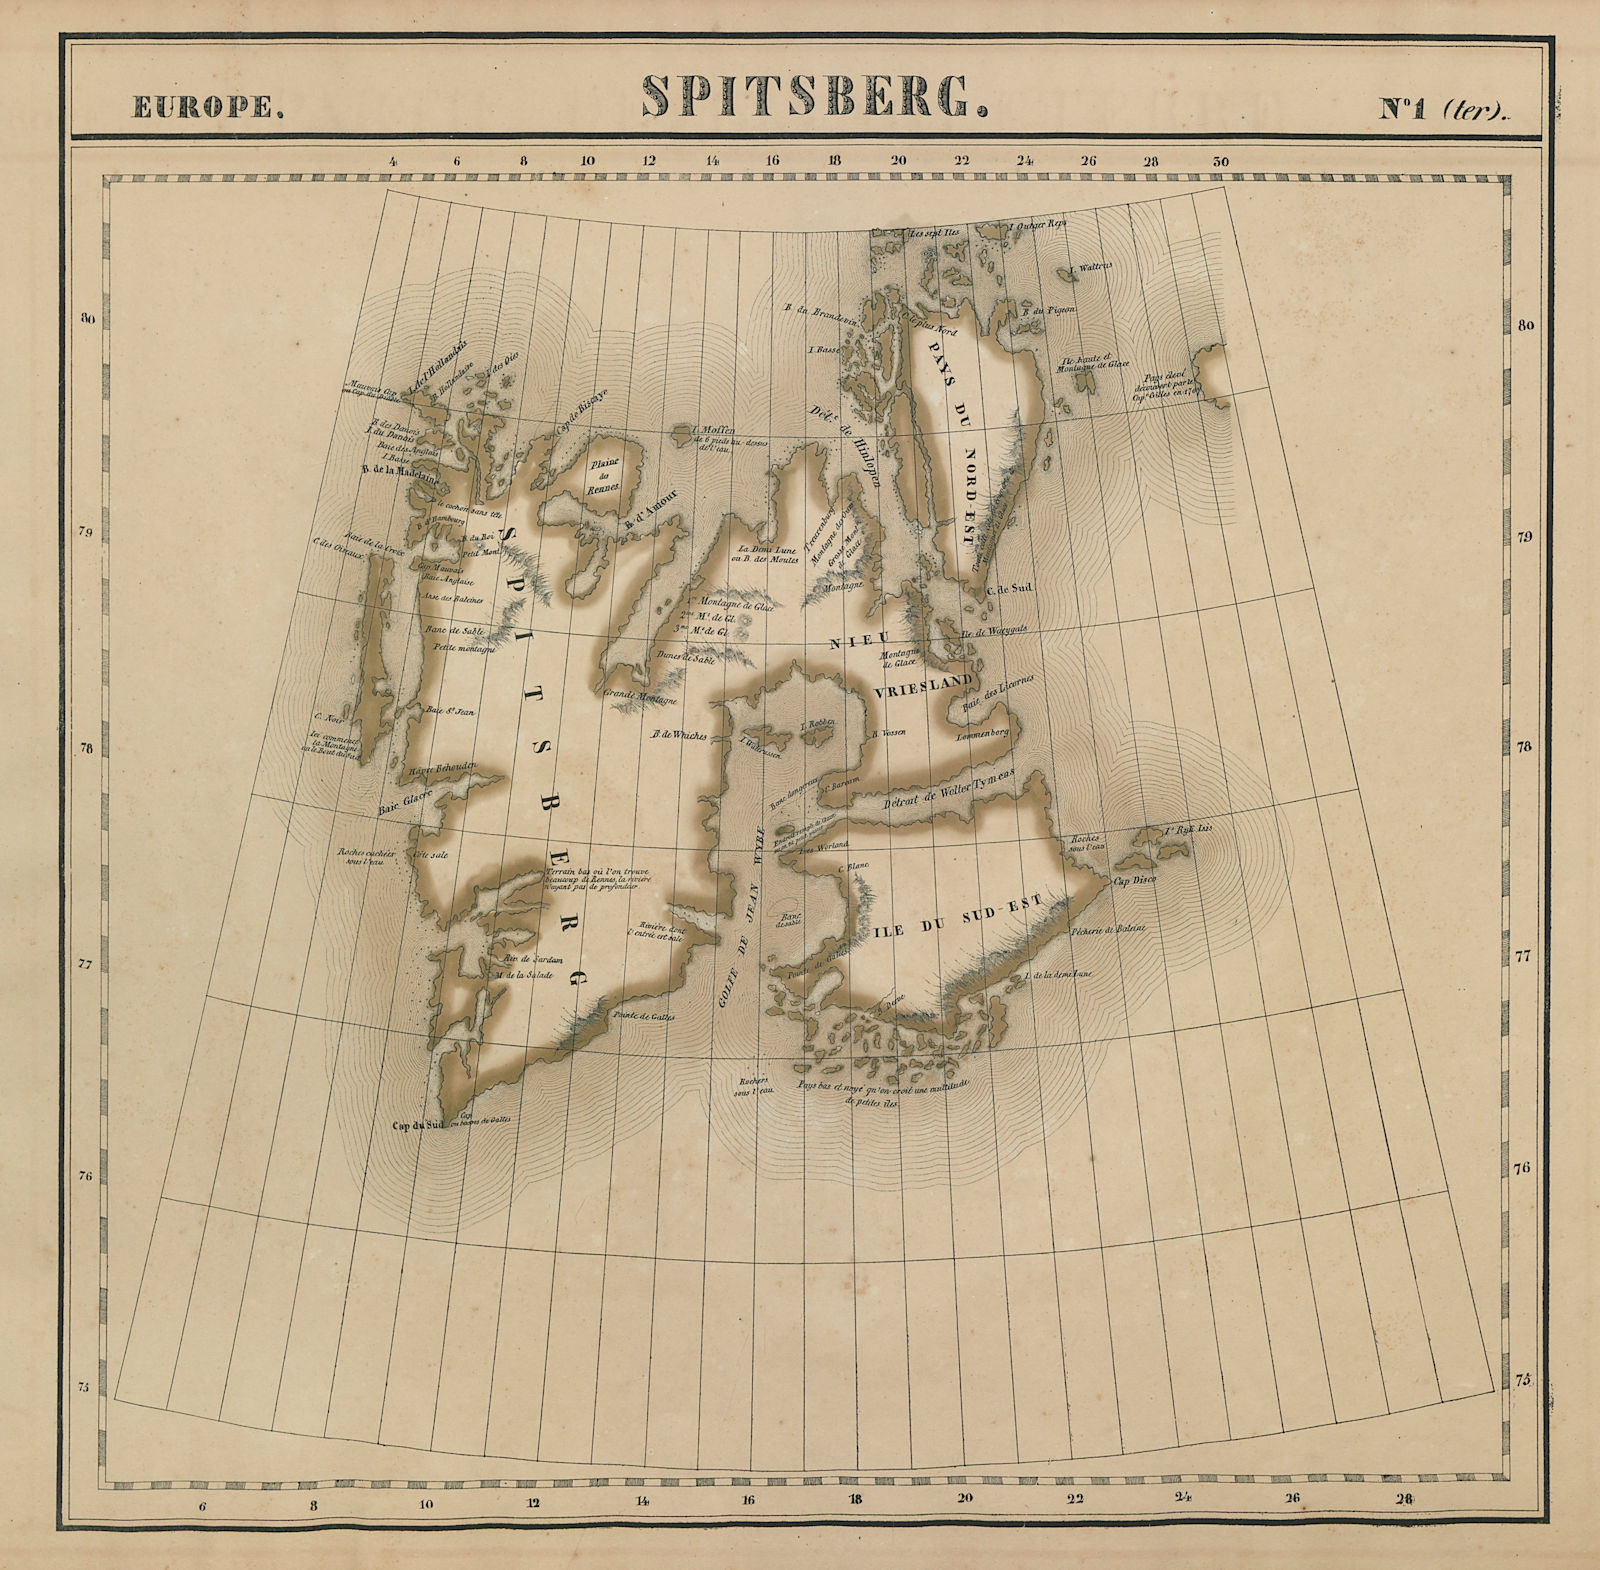 Europe. Spitsberg #1 (ter) Spitsbergen Svalbard Norway. VANDERMAELEN 1827 map